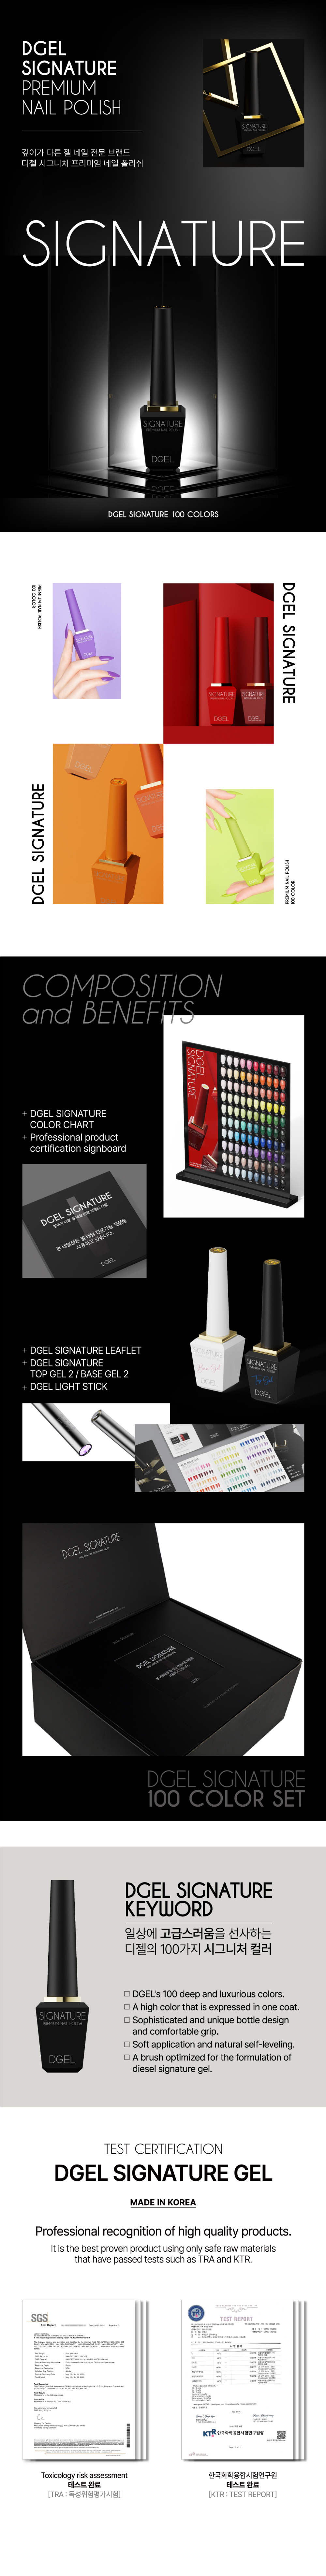 cosmetics product image-S9L6